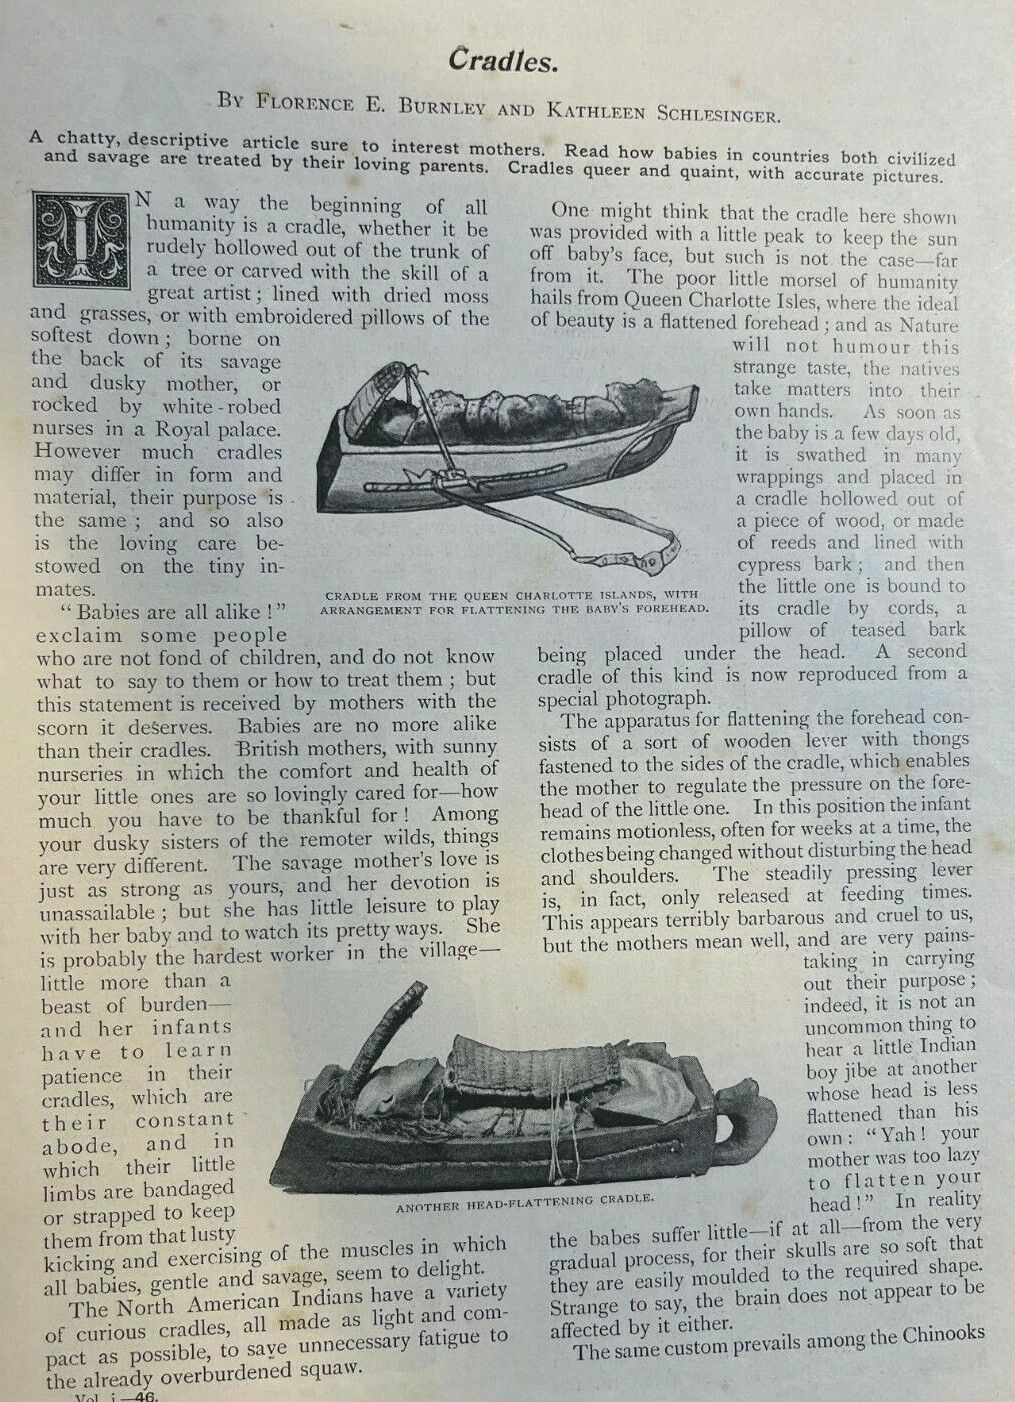 1898 Native American Cradles illustrated